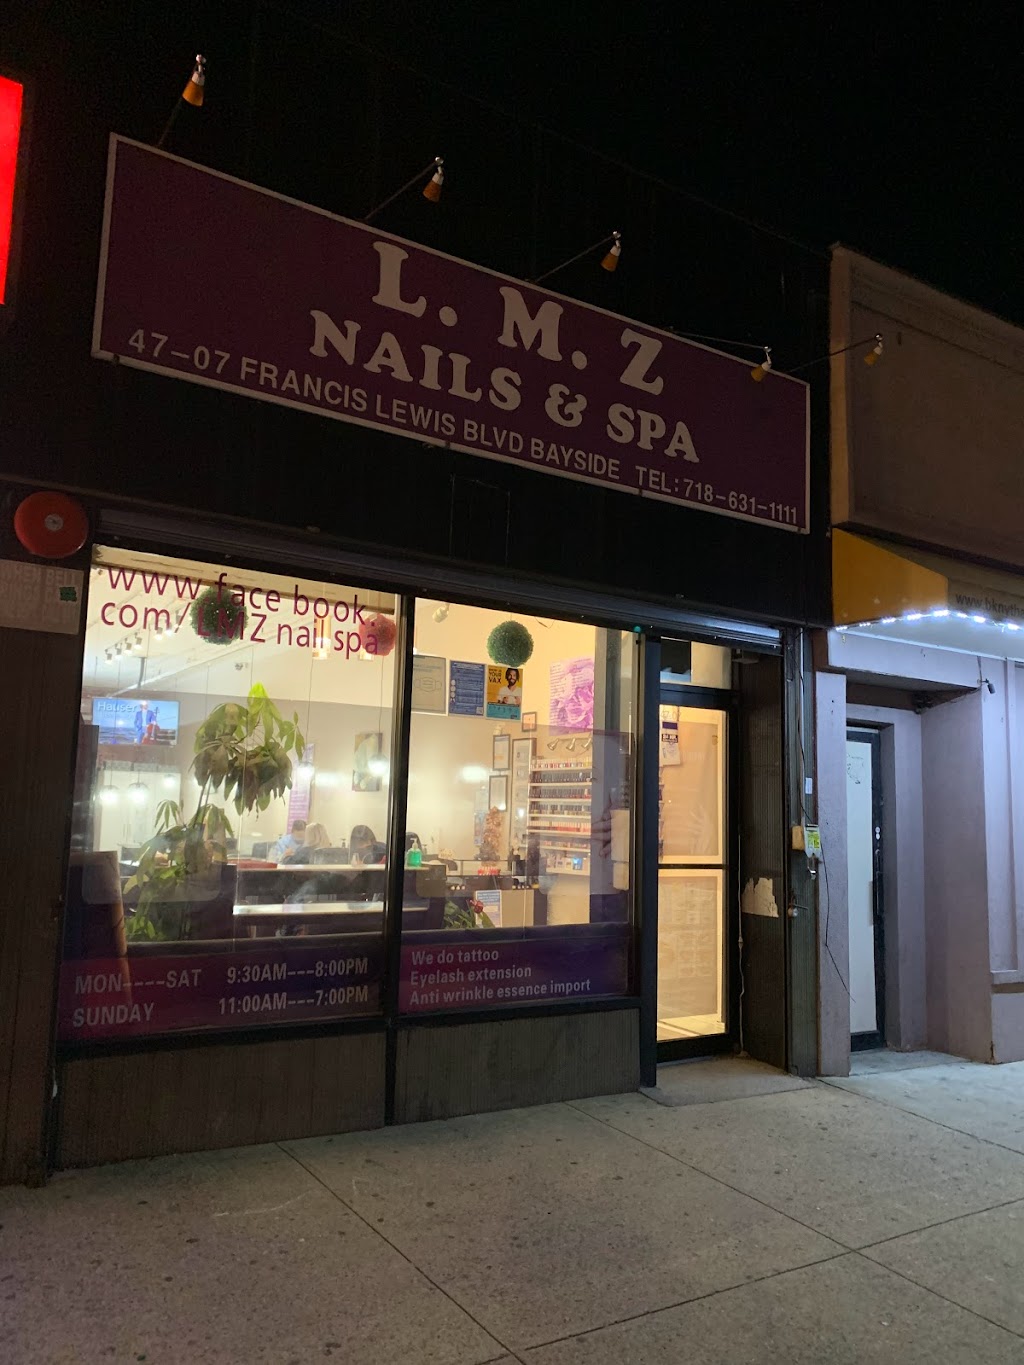 LMZ Nails & Spa | 47-7 Francis Lewis Blvd, Queens, NY 11361 | Phone: (718) 631-1111